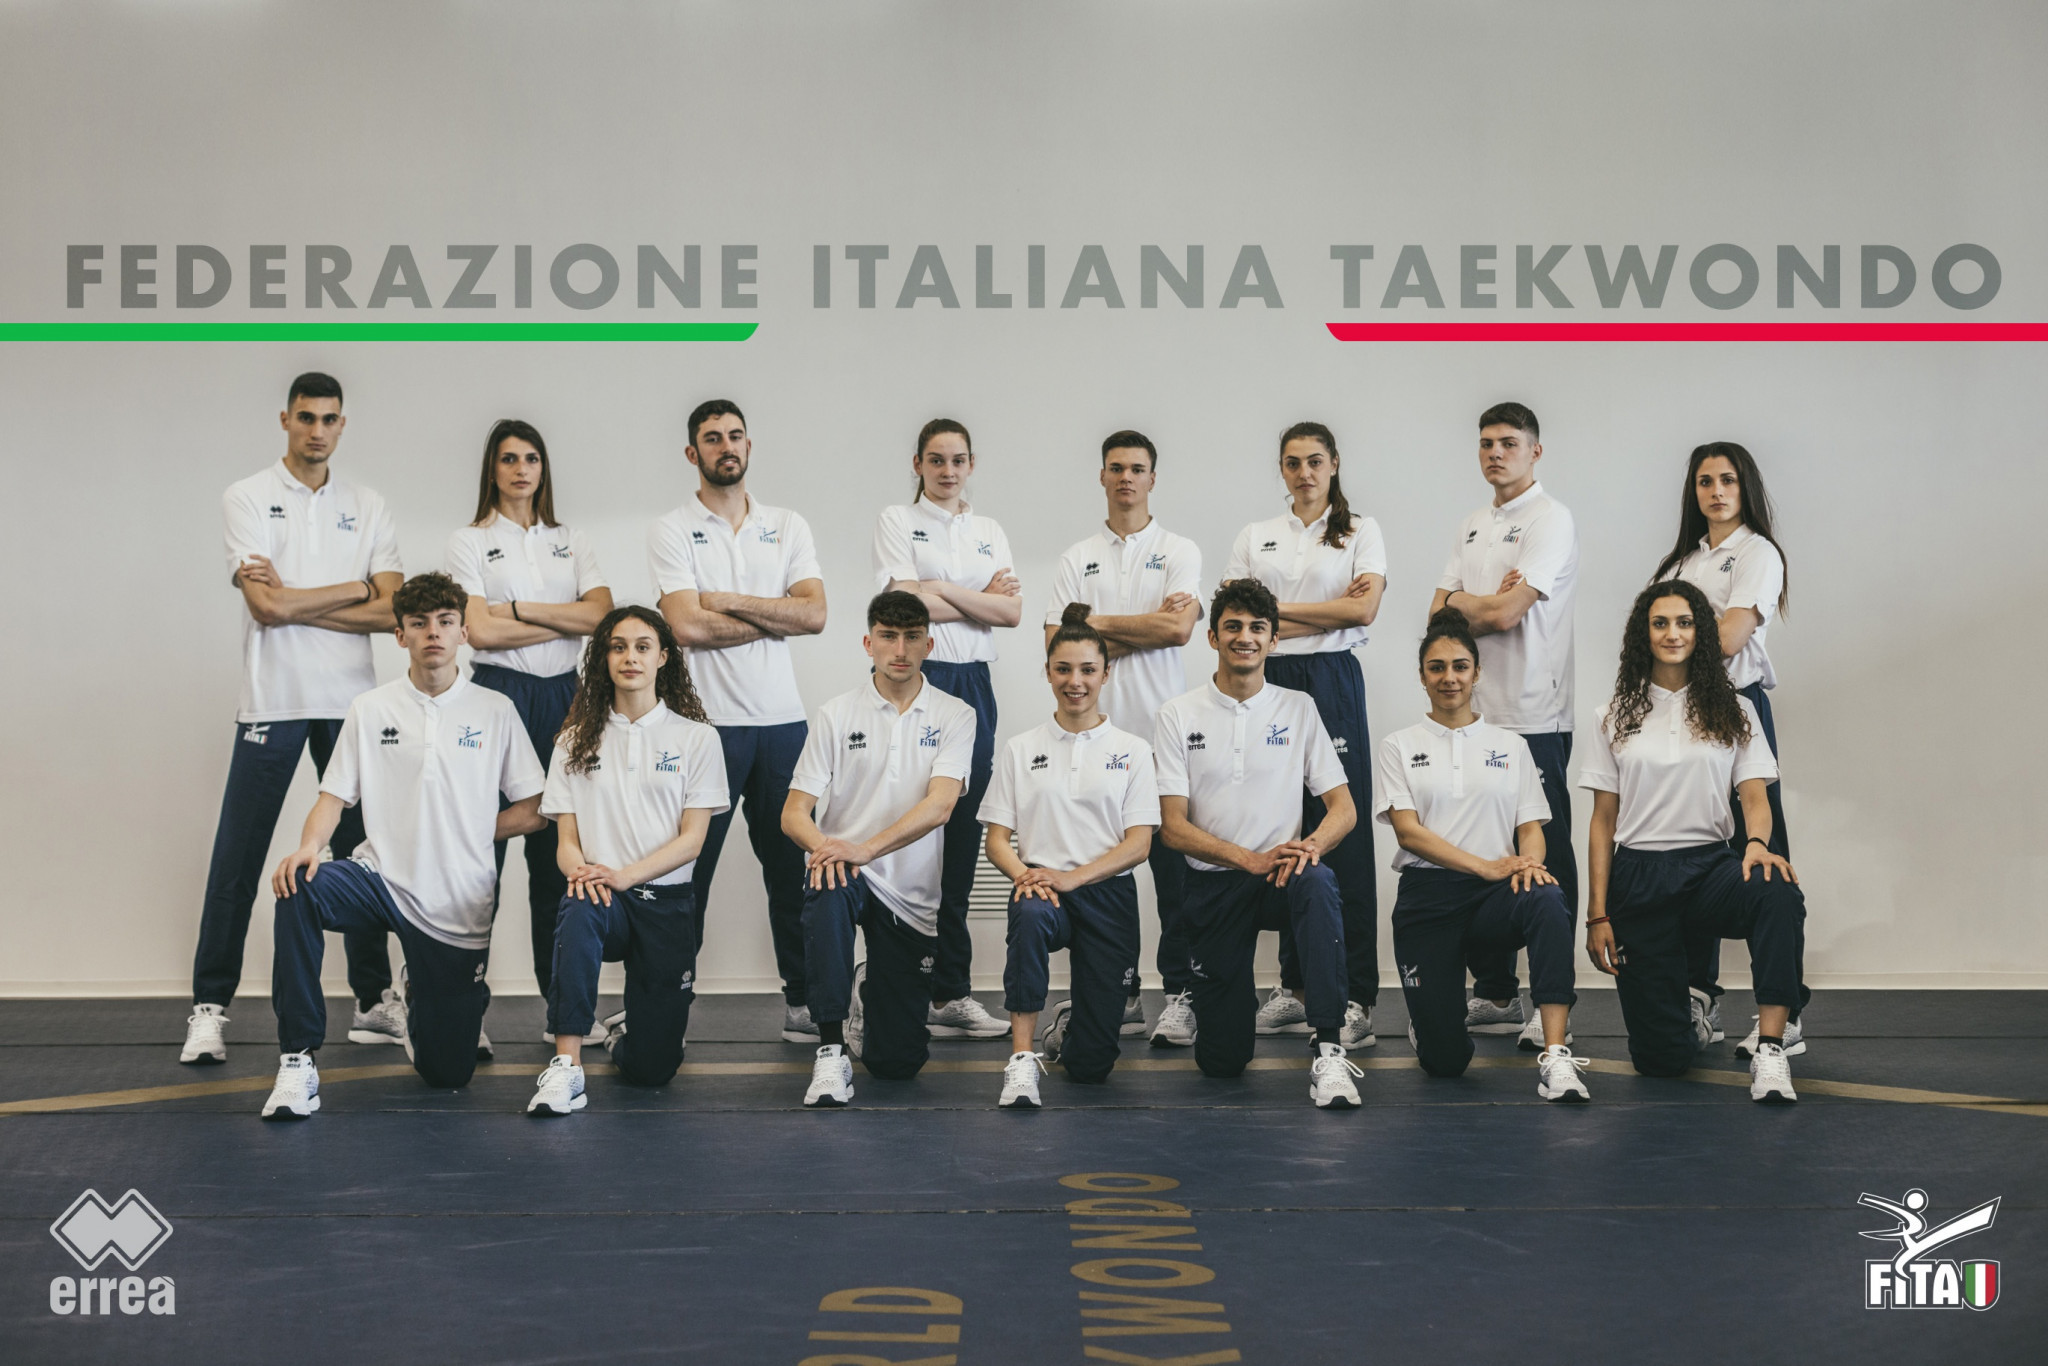 Italian Taekwondo Federation secures new sponsorship deal with Erreà